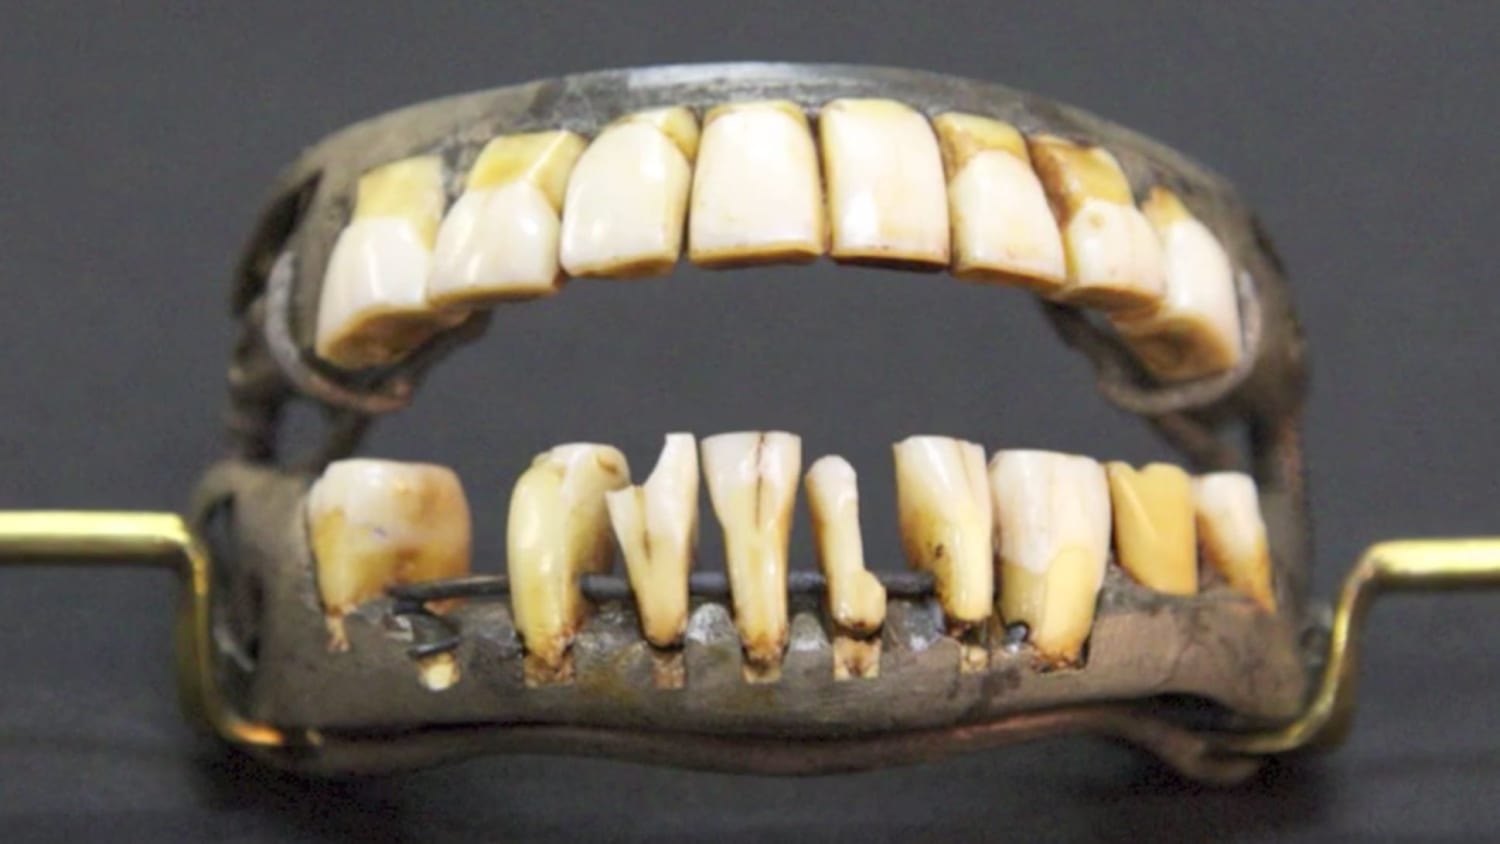 The Funky History of George Washington's Fake Teeth